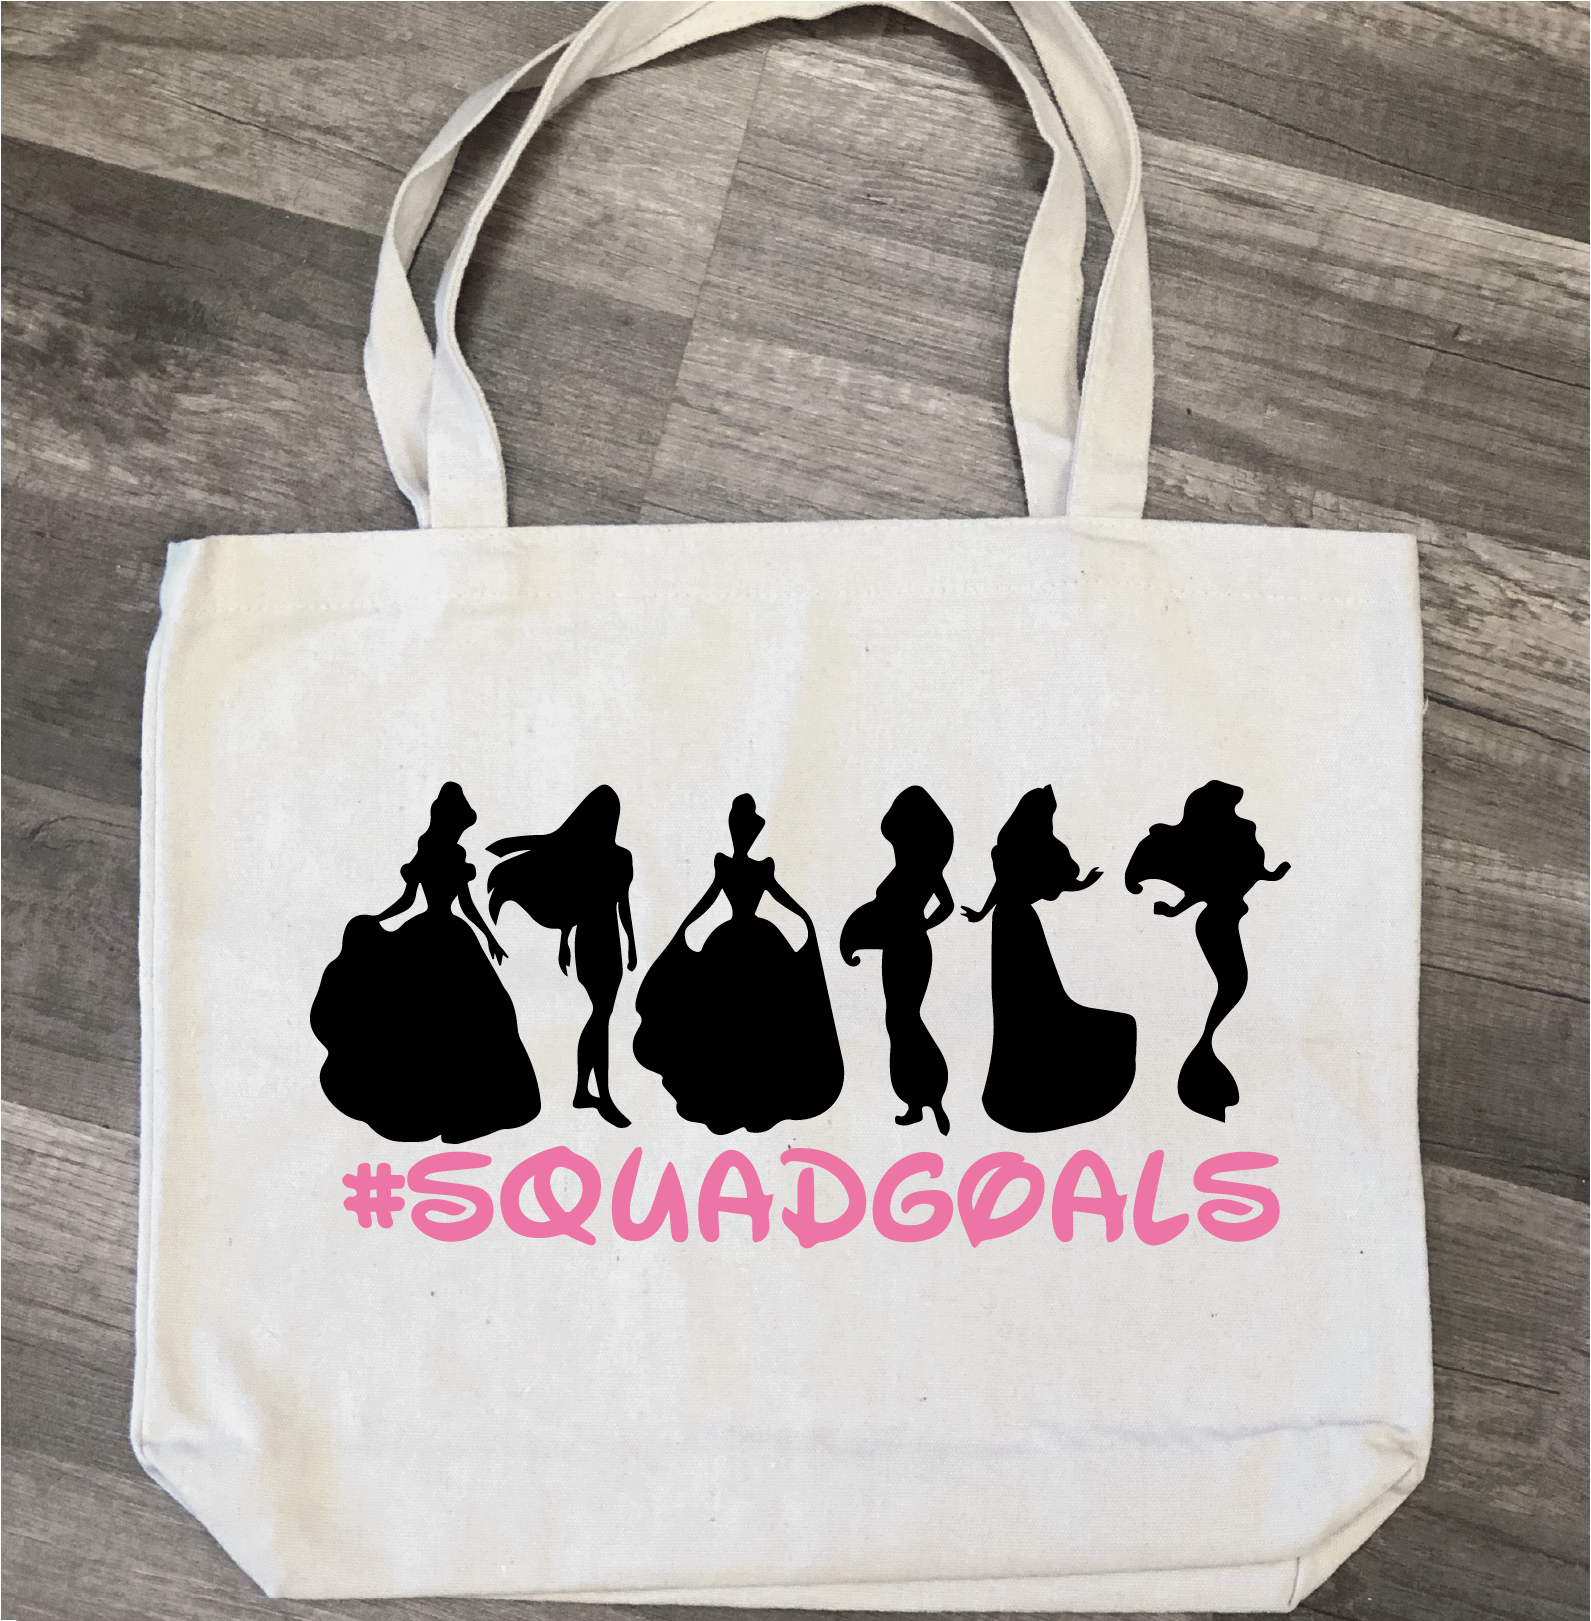 Princess Squad Goals: Canvas Bag - Paisley Grace Makery